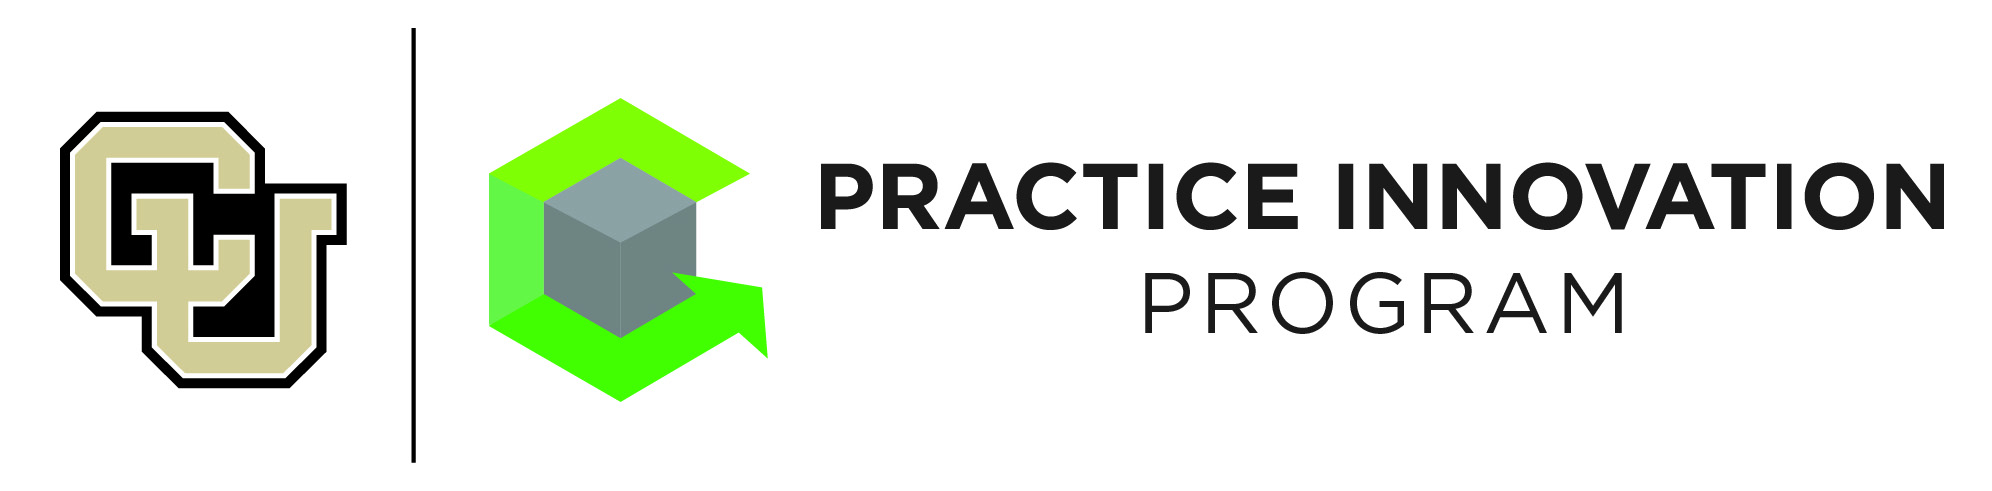 Practice Innovation Program logo.